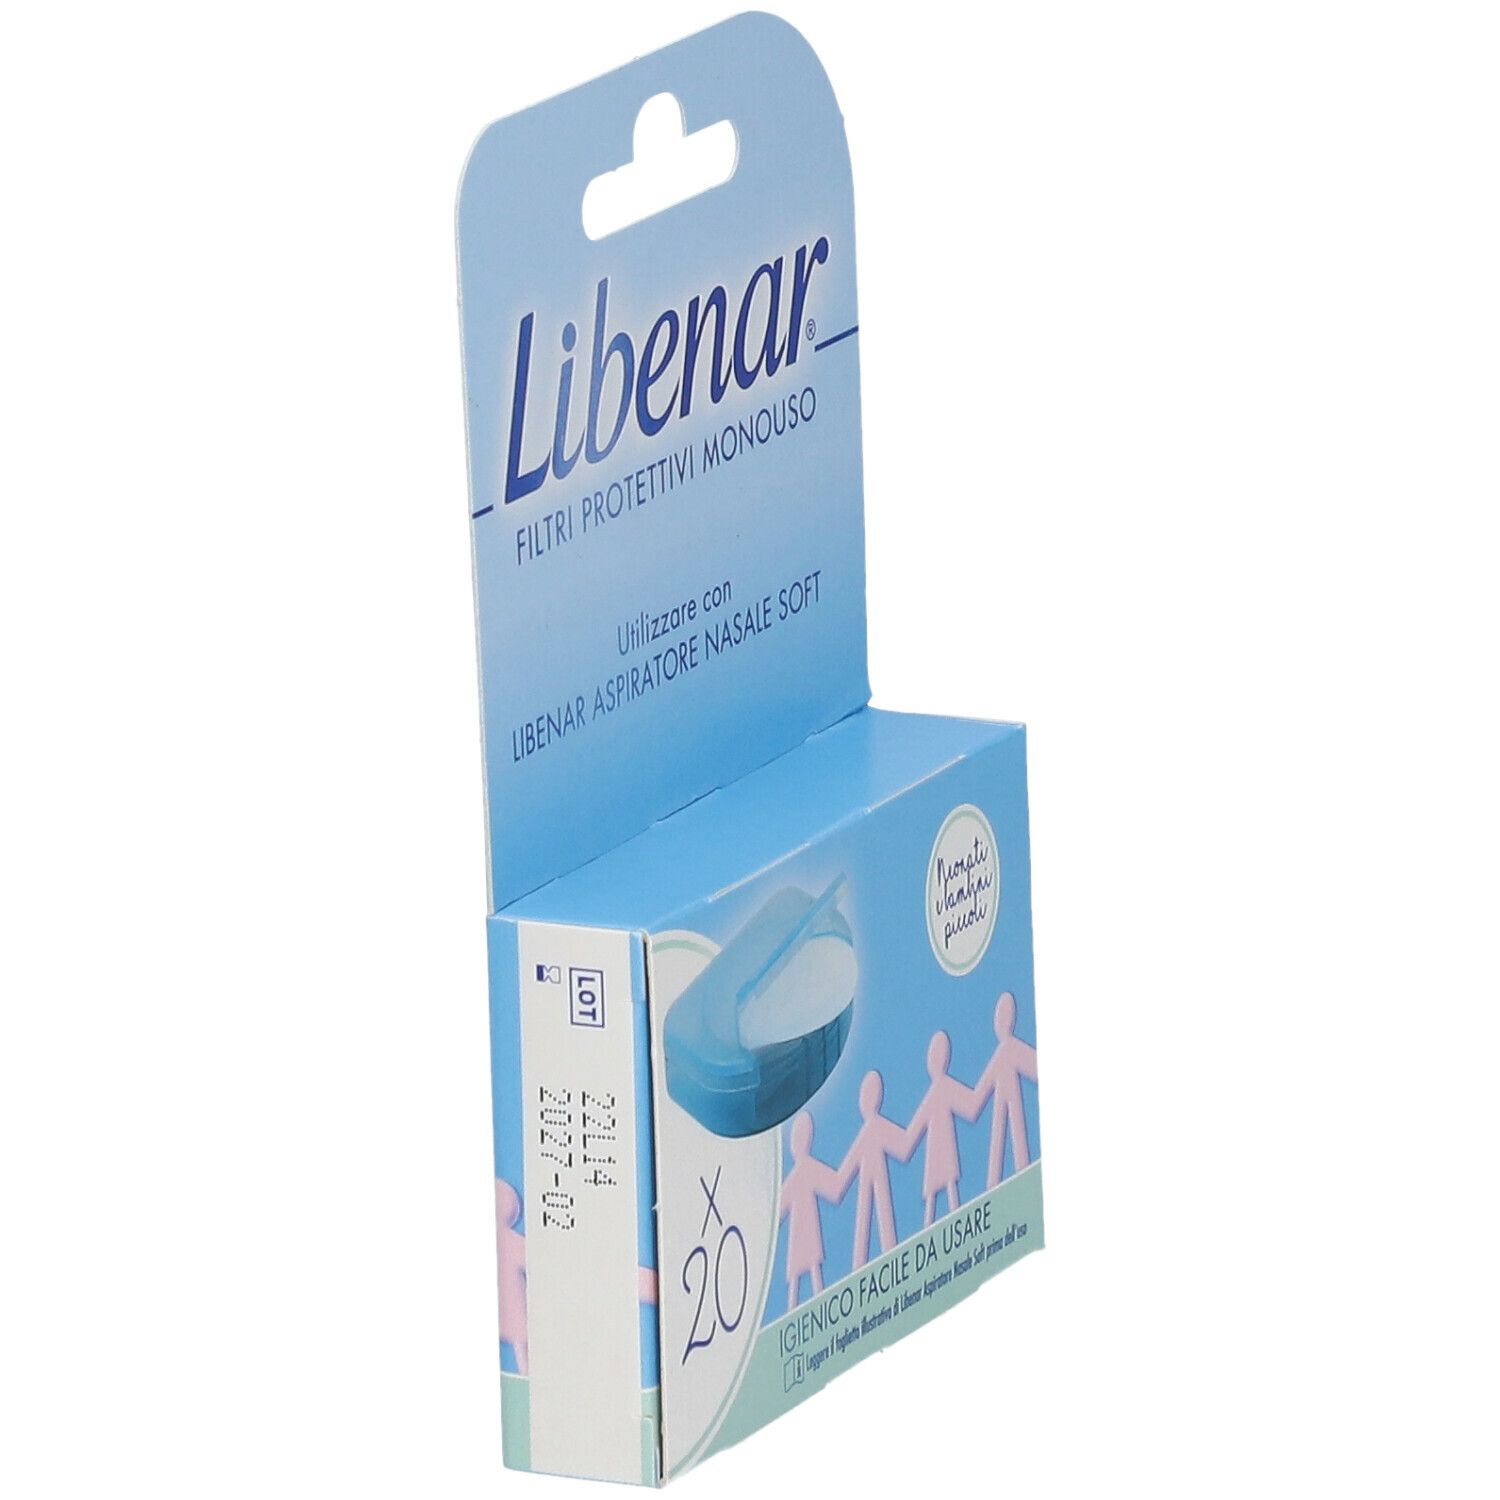 Libenar® Filtri Protettivi Monouso